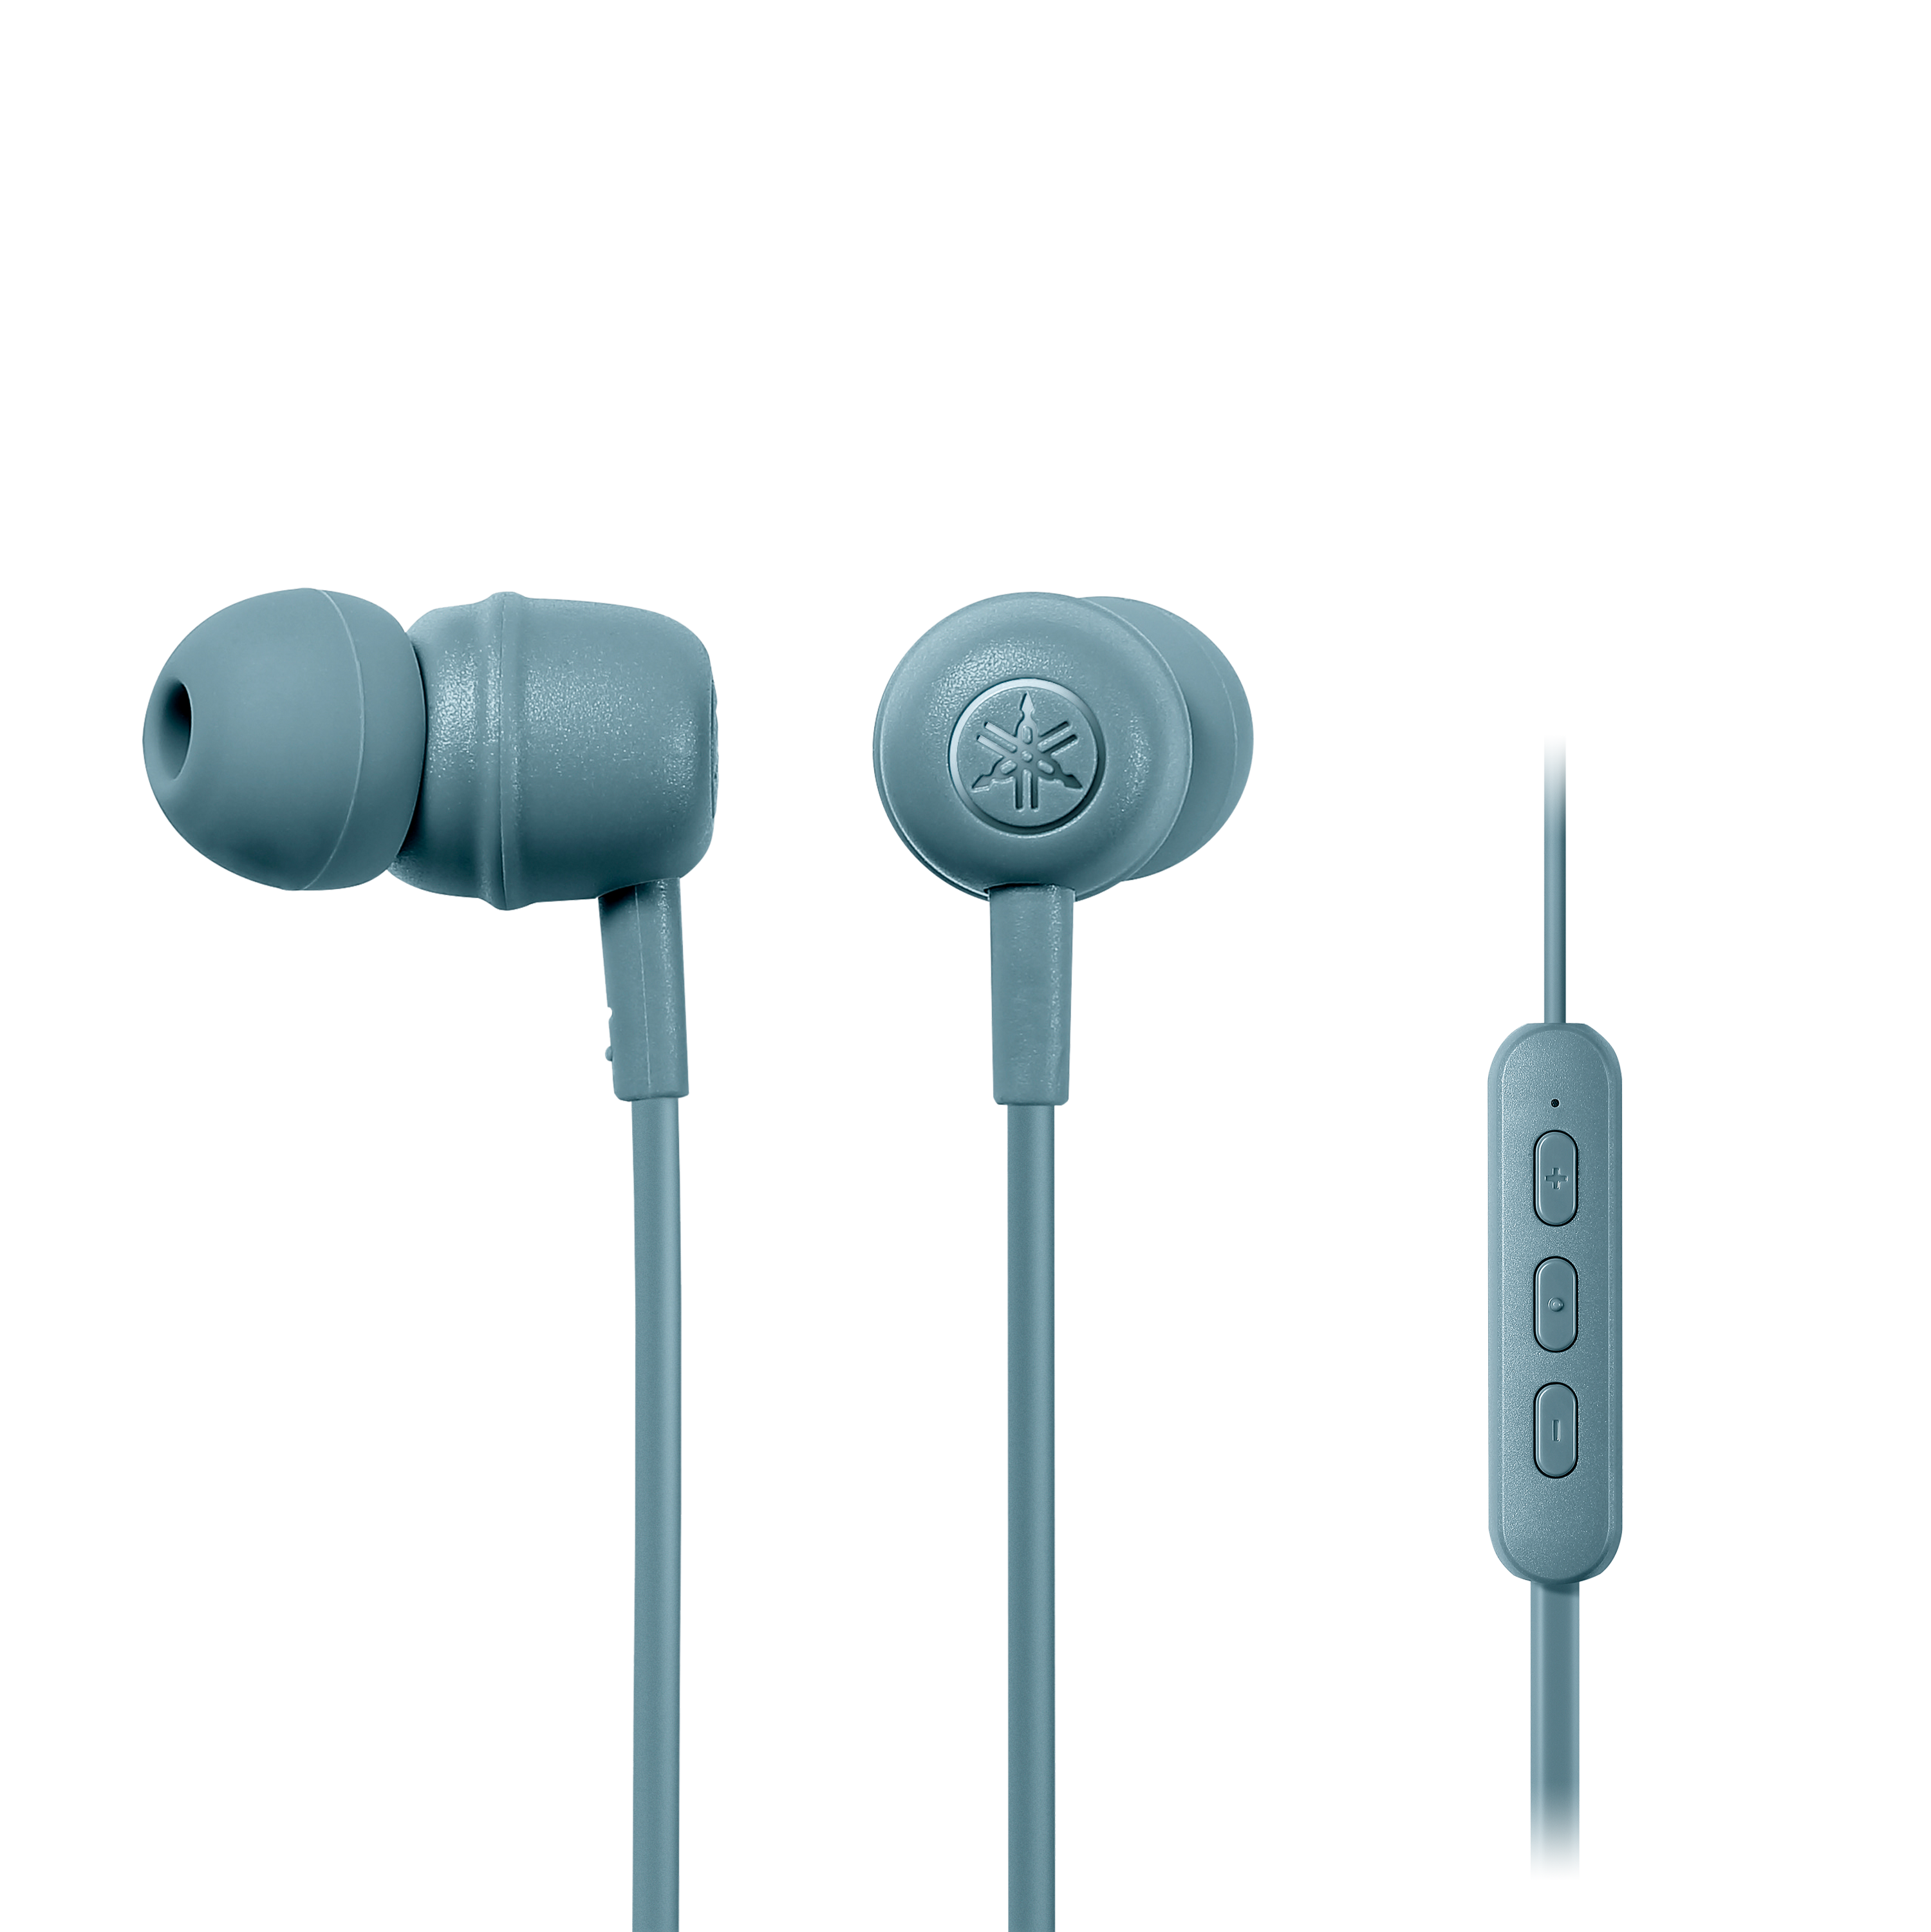 Yamaha EP-E30A Bluetooth In-Ear Earphones 後掛式藍牙耳機